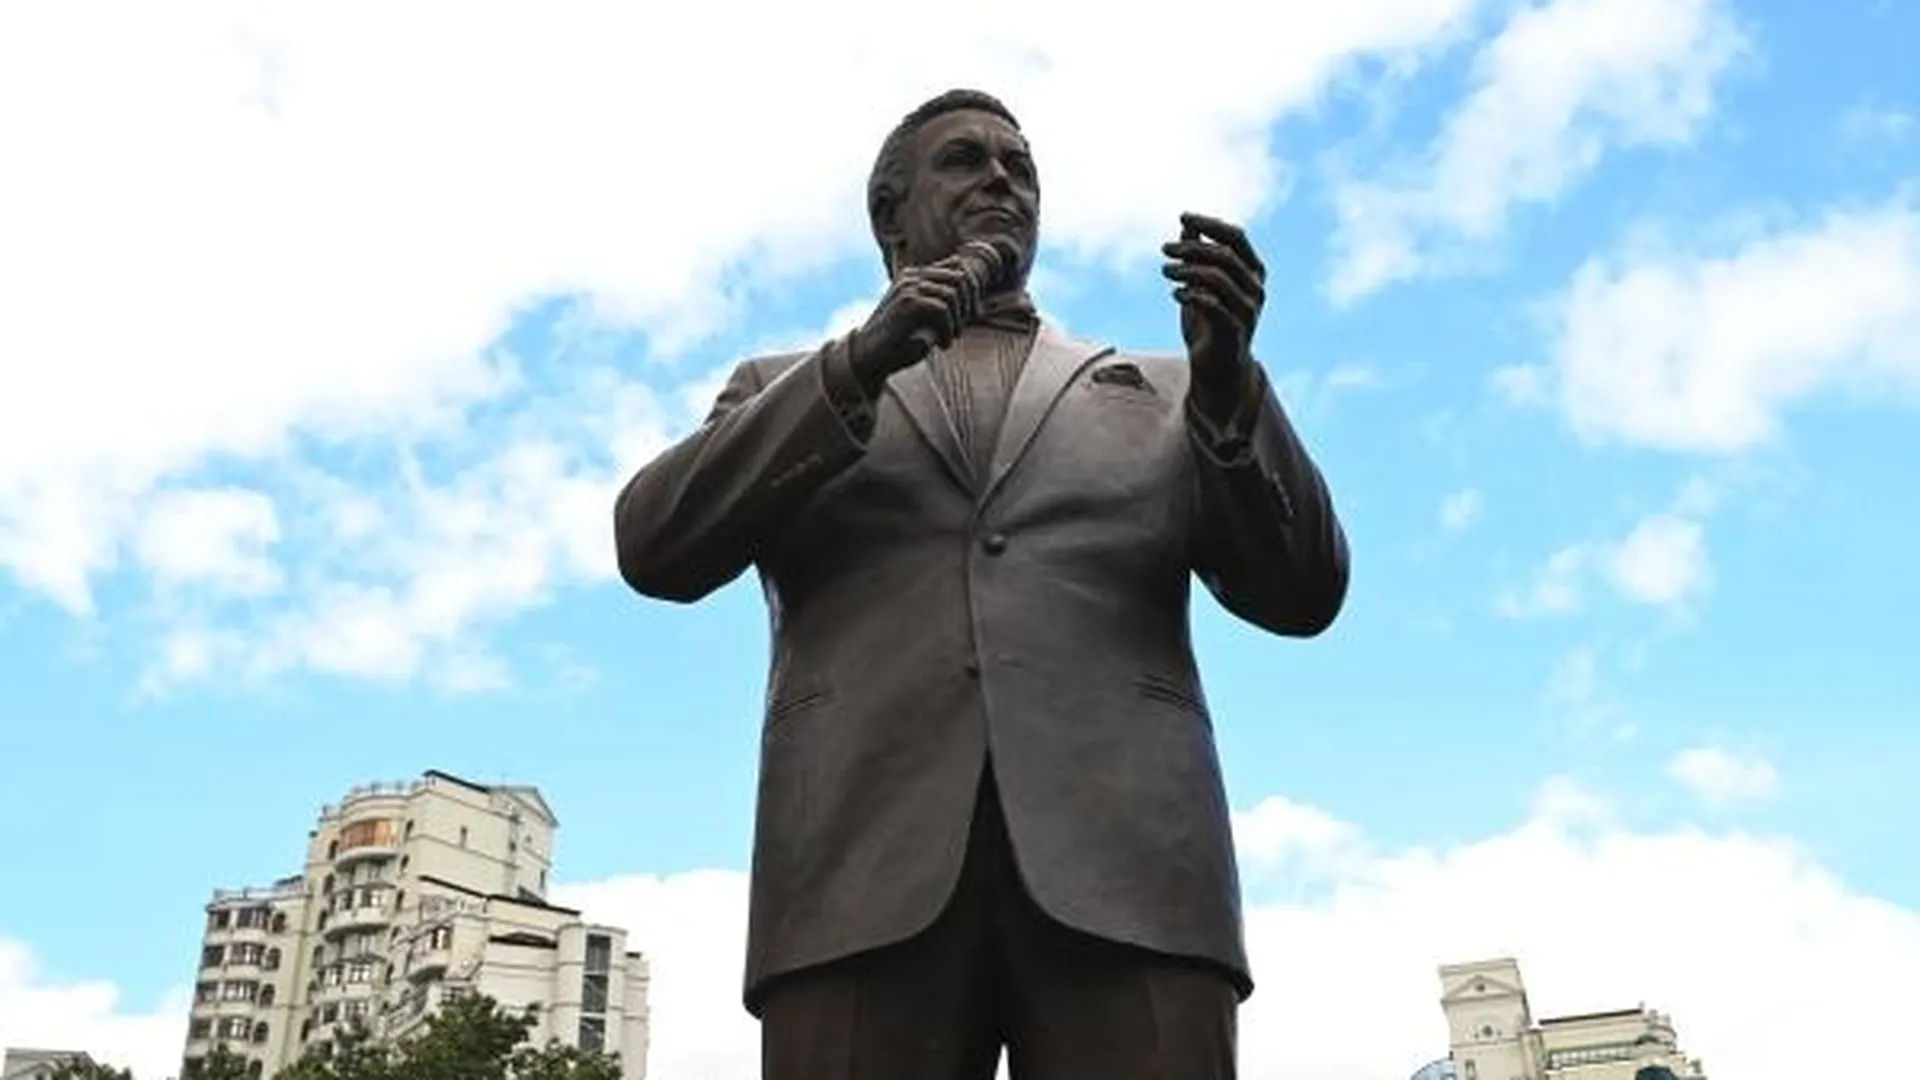 Мемориал Кобзону в Москве превратили в наркошоп